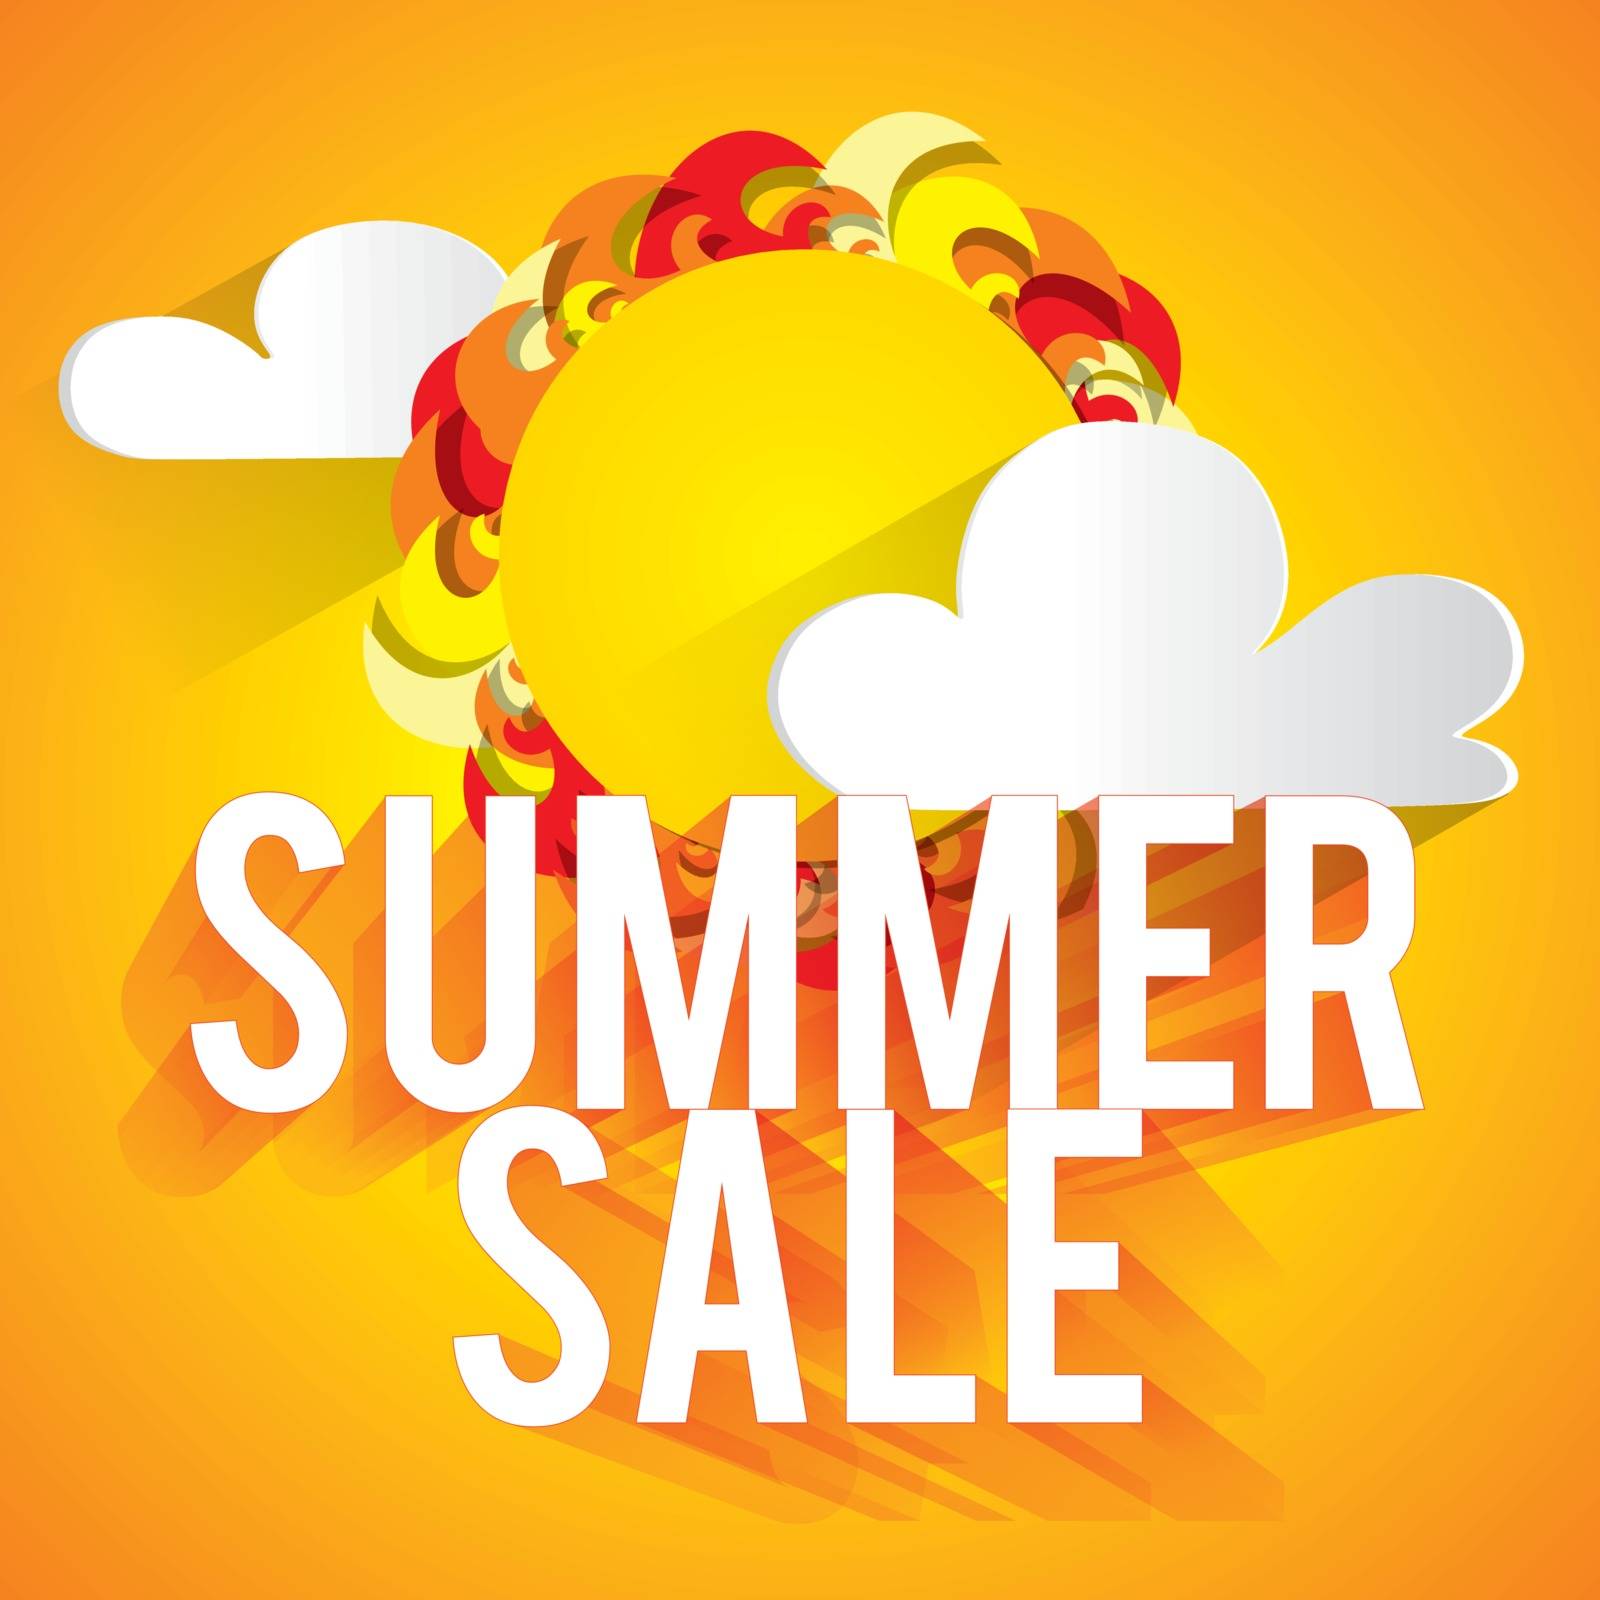 Summer sale by kartyl